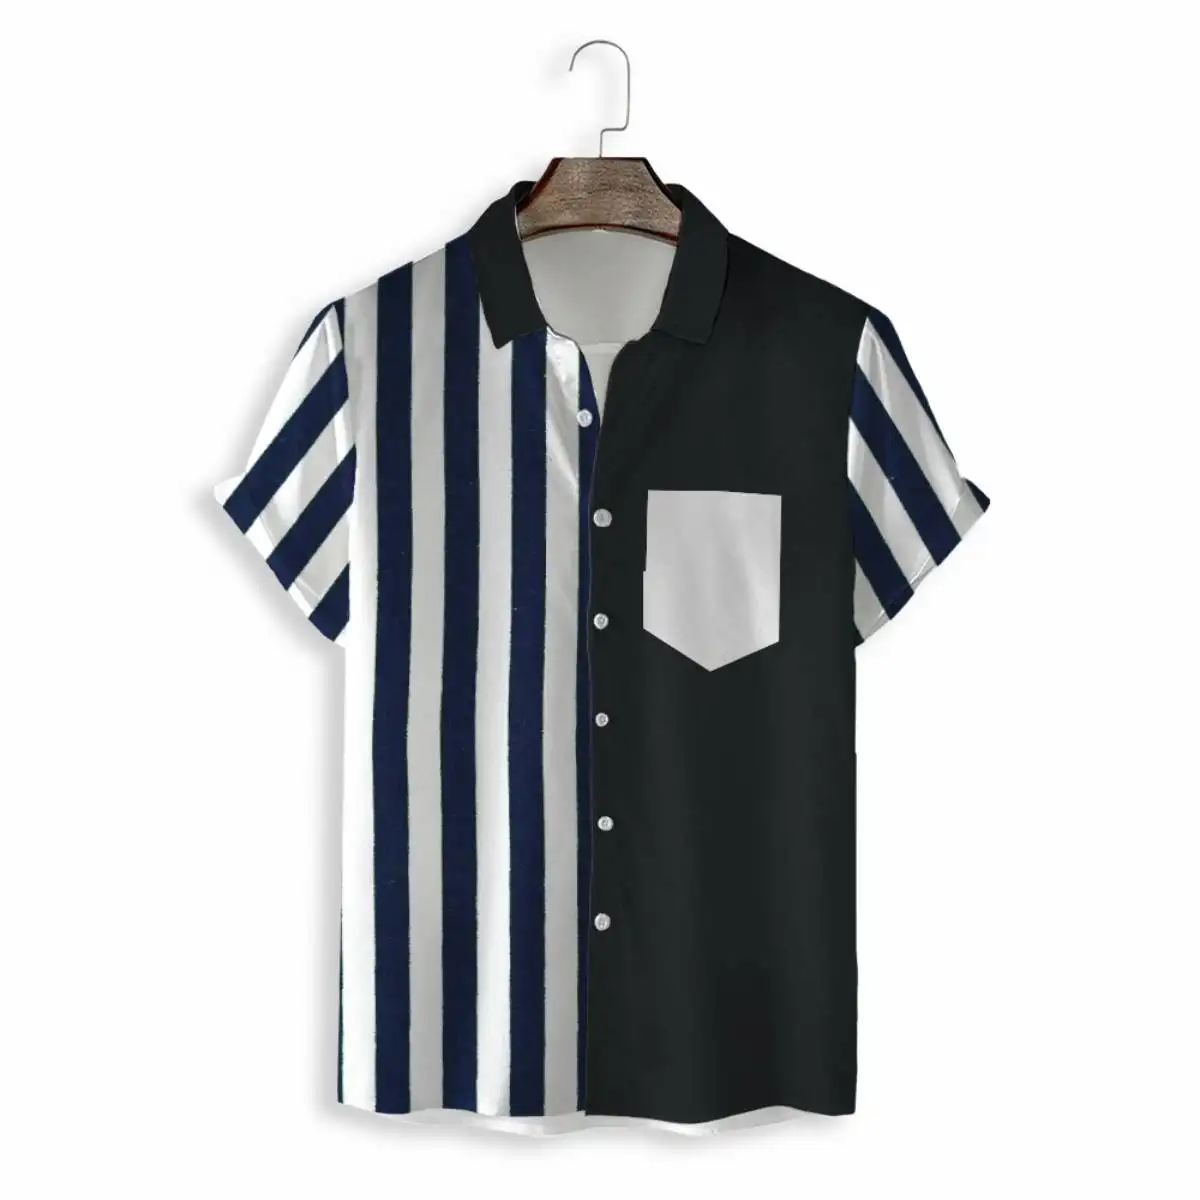 Free Sample Summer Men's Short-sleeved Patchwork Shirt Black White Stripe Shirt Camisas Para Hombre